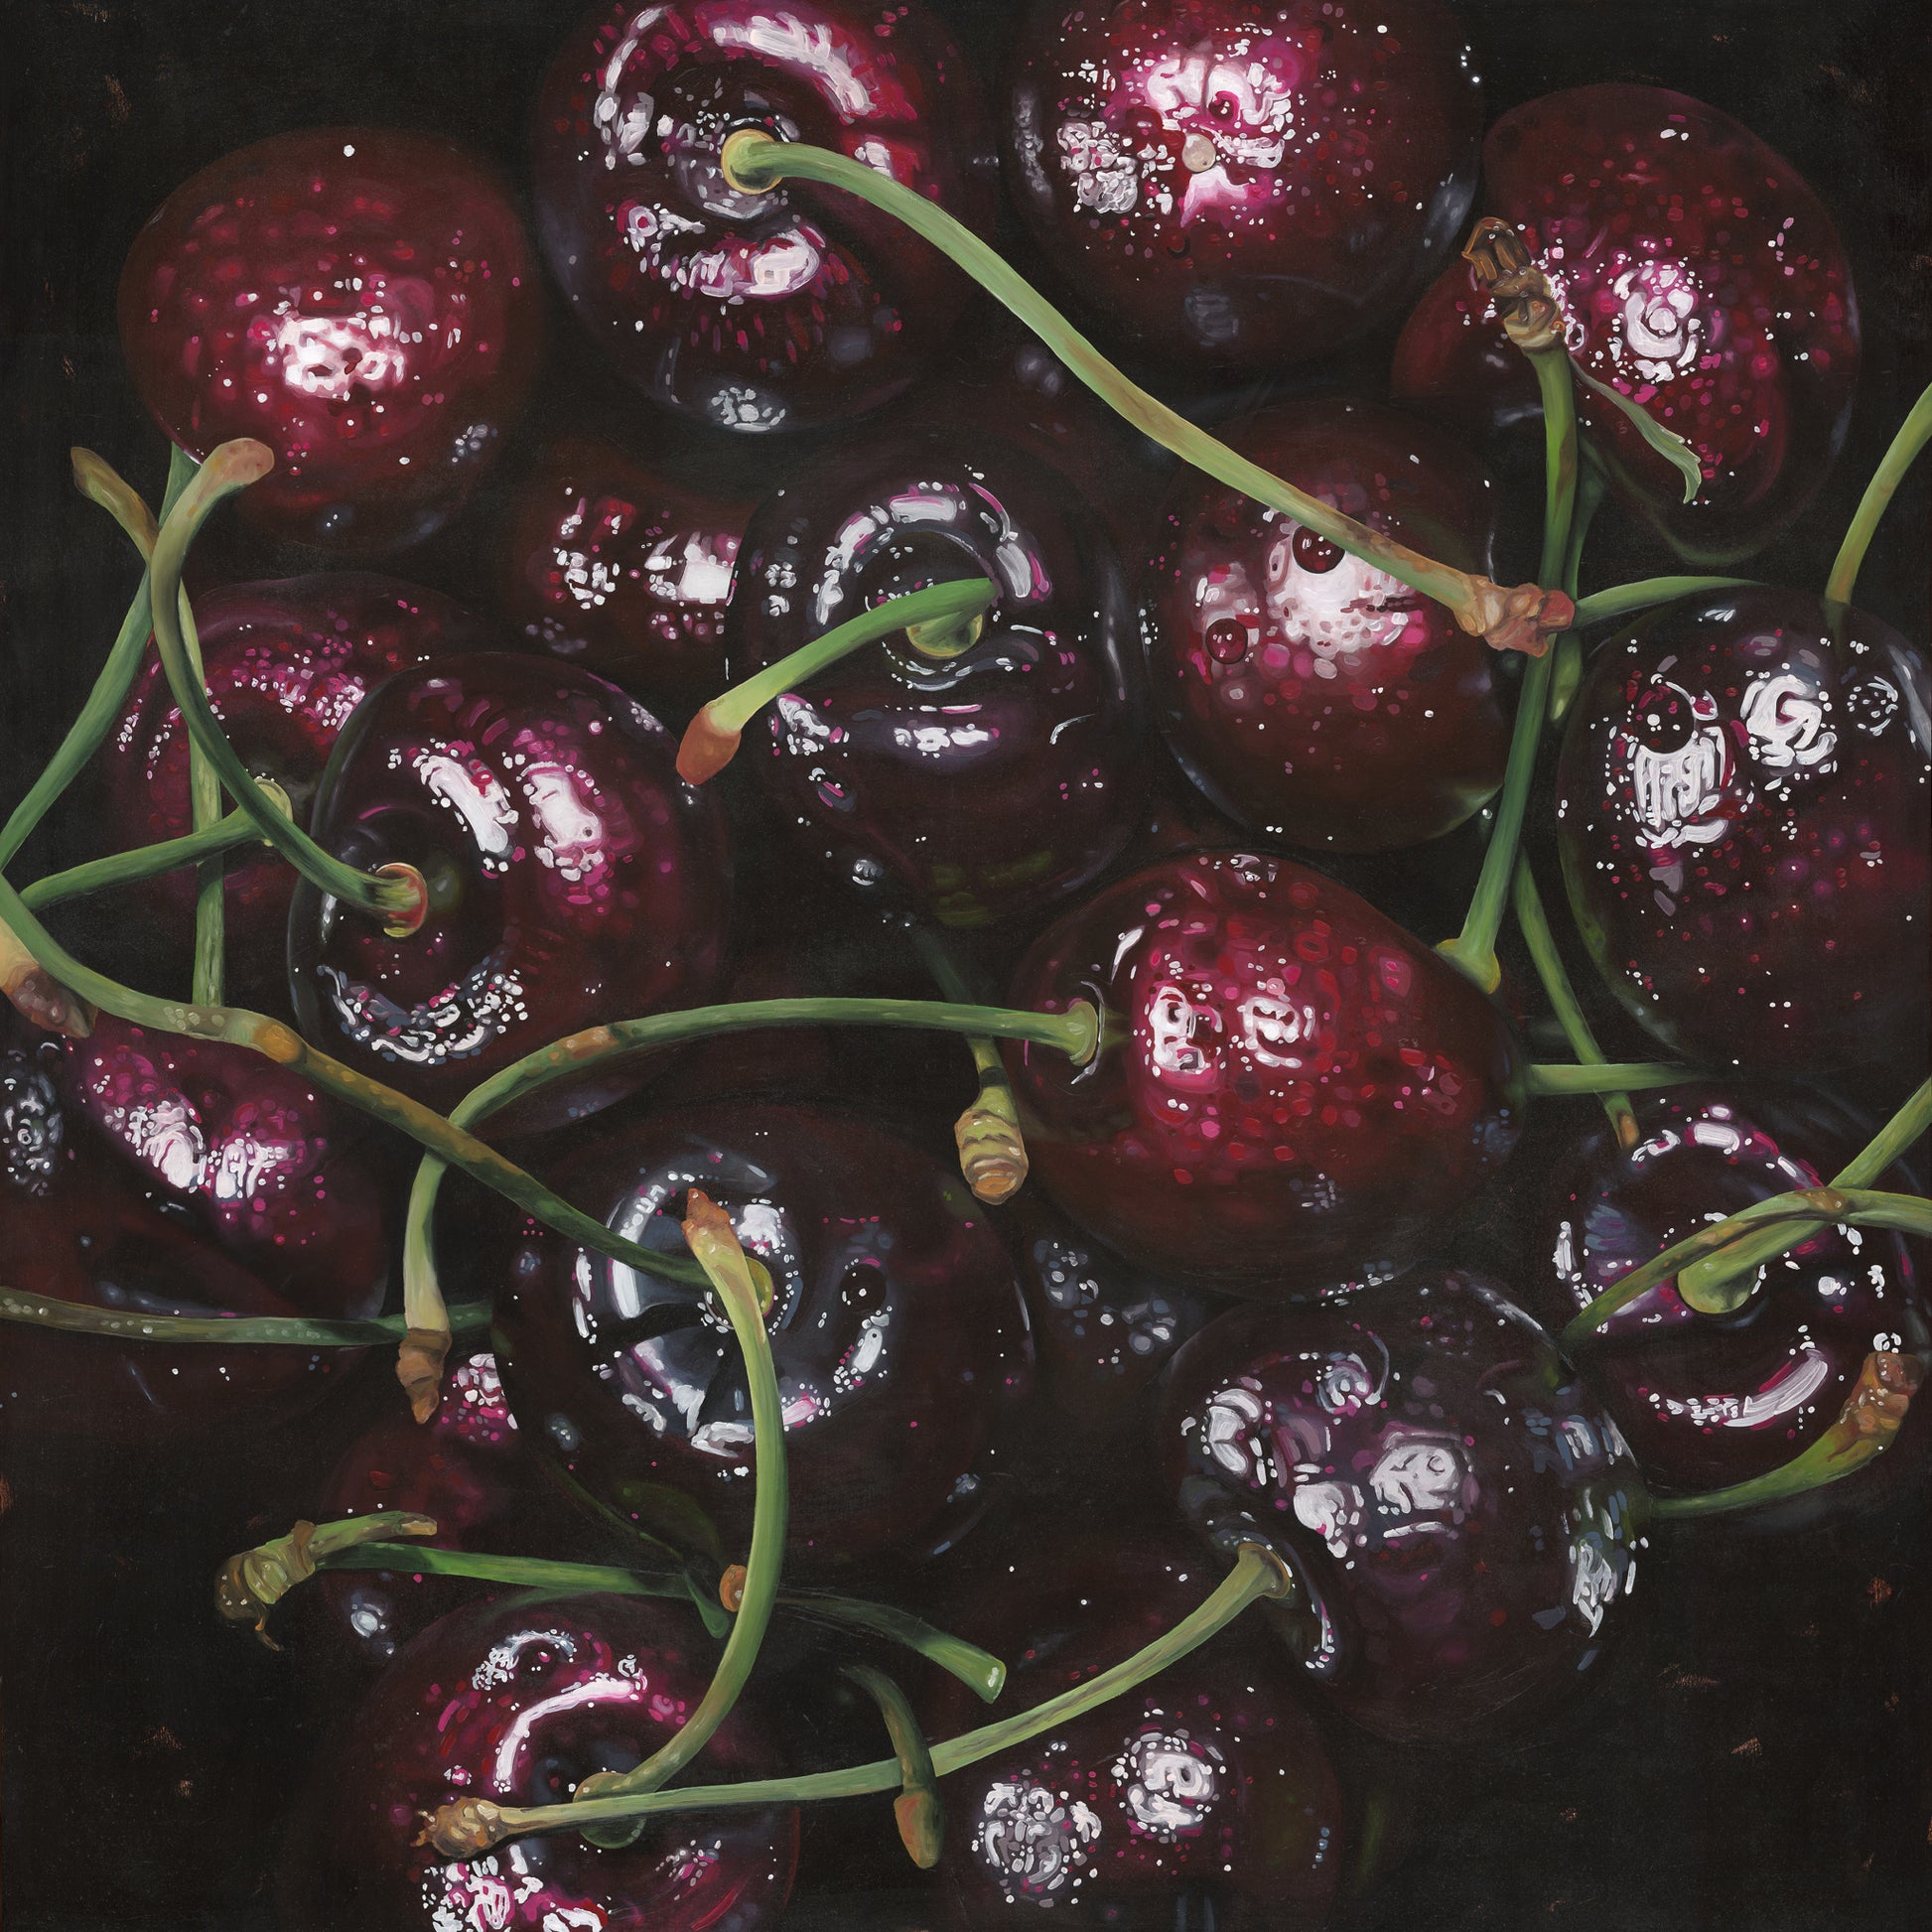 The original painting “Cherries" by Hannah Kilby from Hannah Michelle Studios.